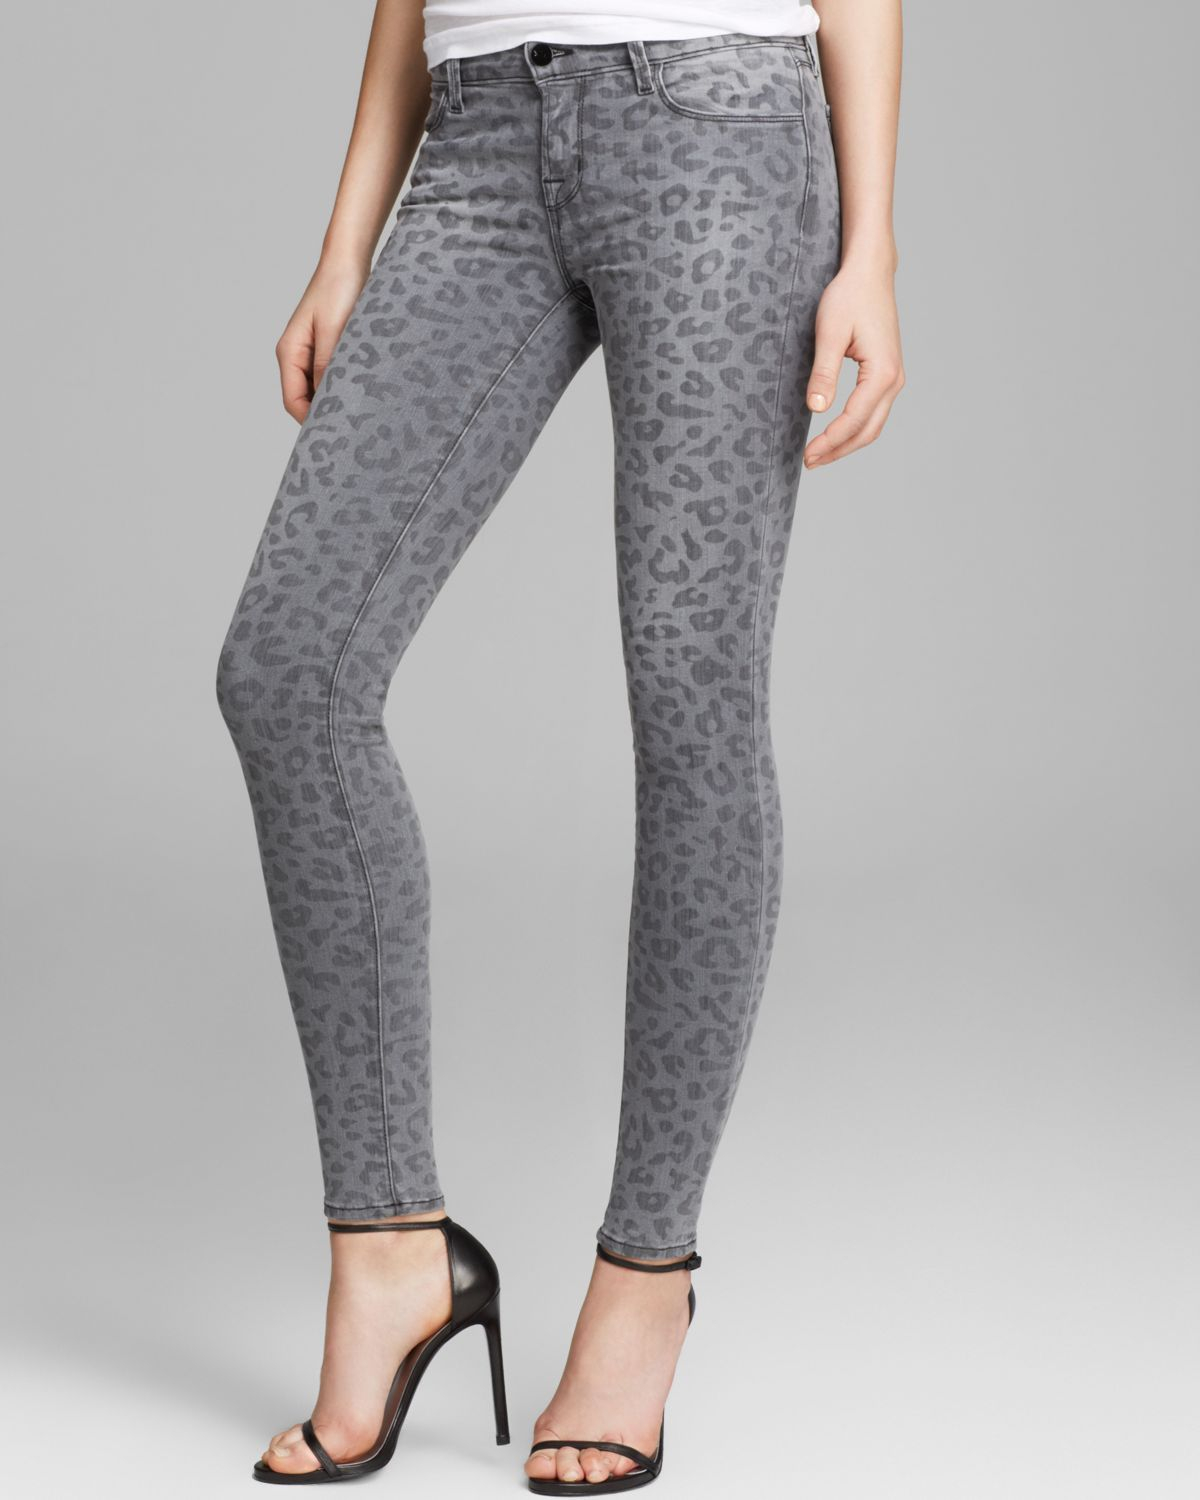 Lyst - J Brand Jeans Leopard Printed Skinny in Onyx in Gray